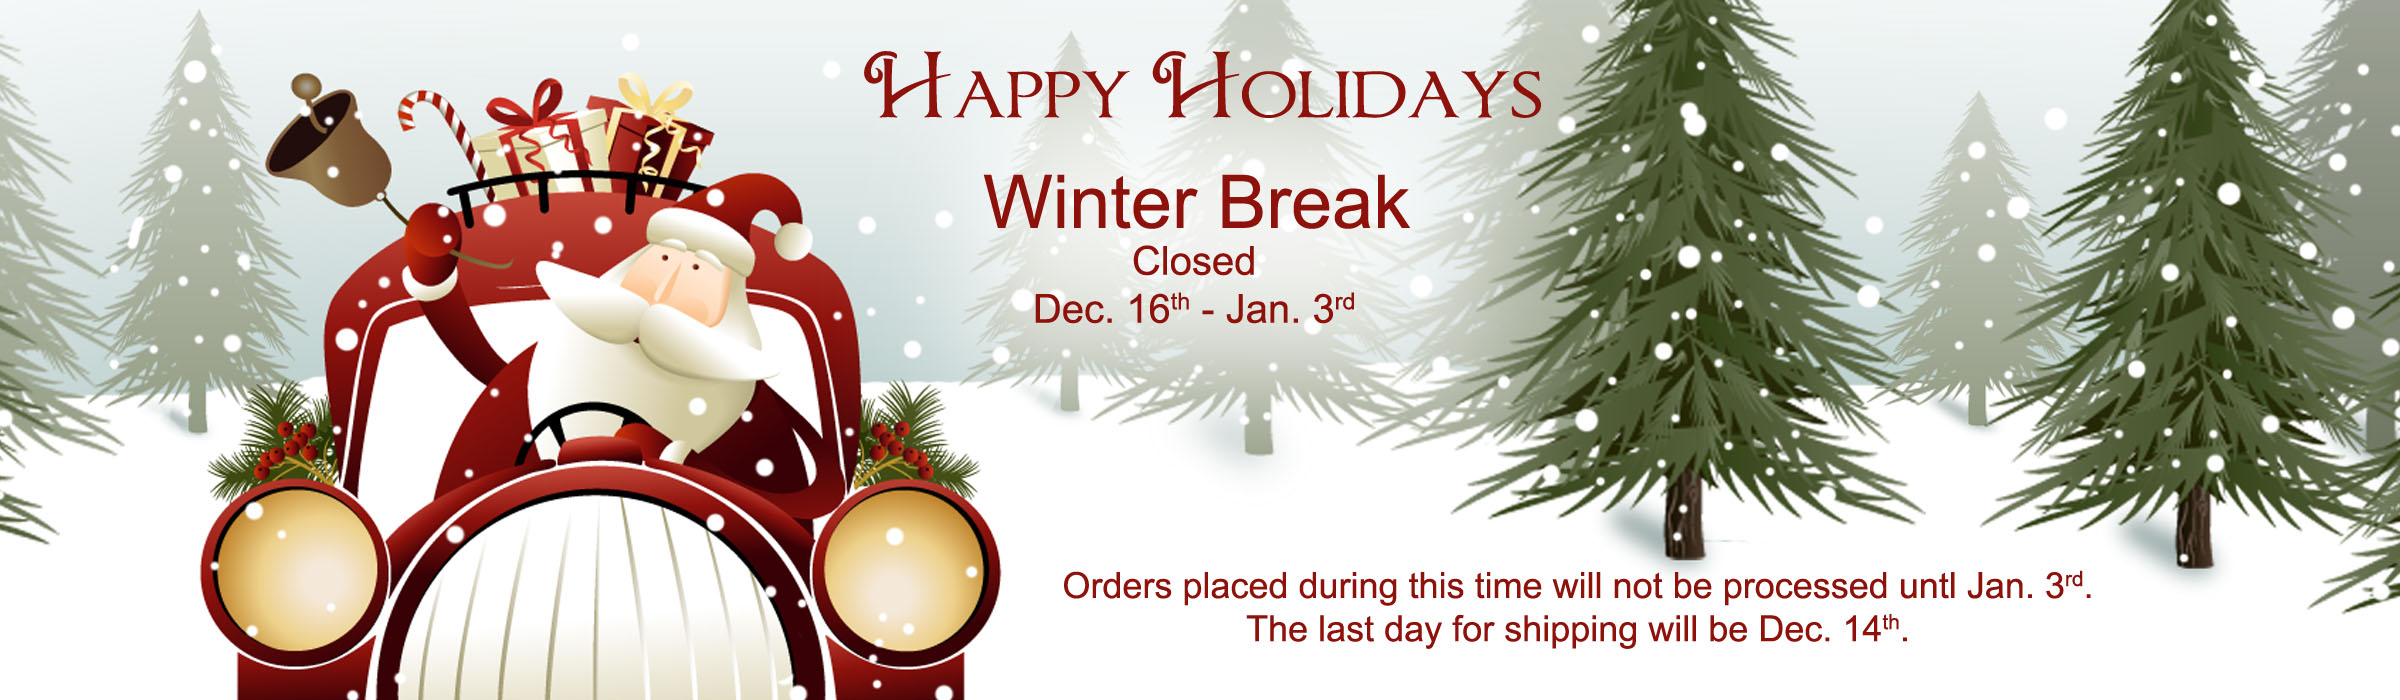 Winter Break closed dec. 16 to Jan 3